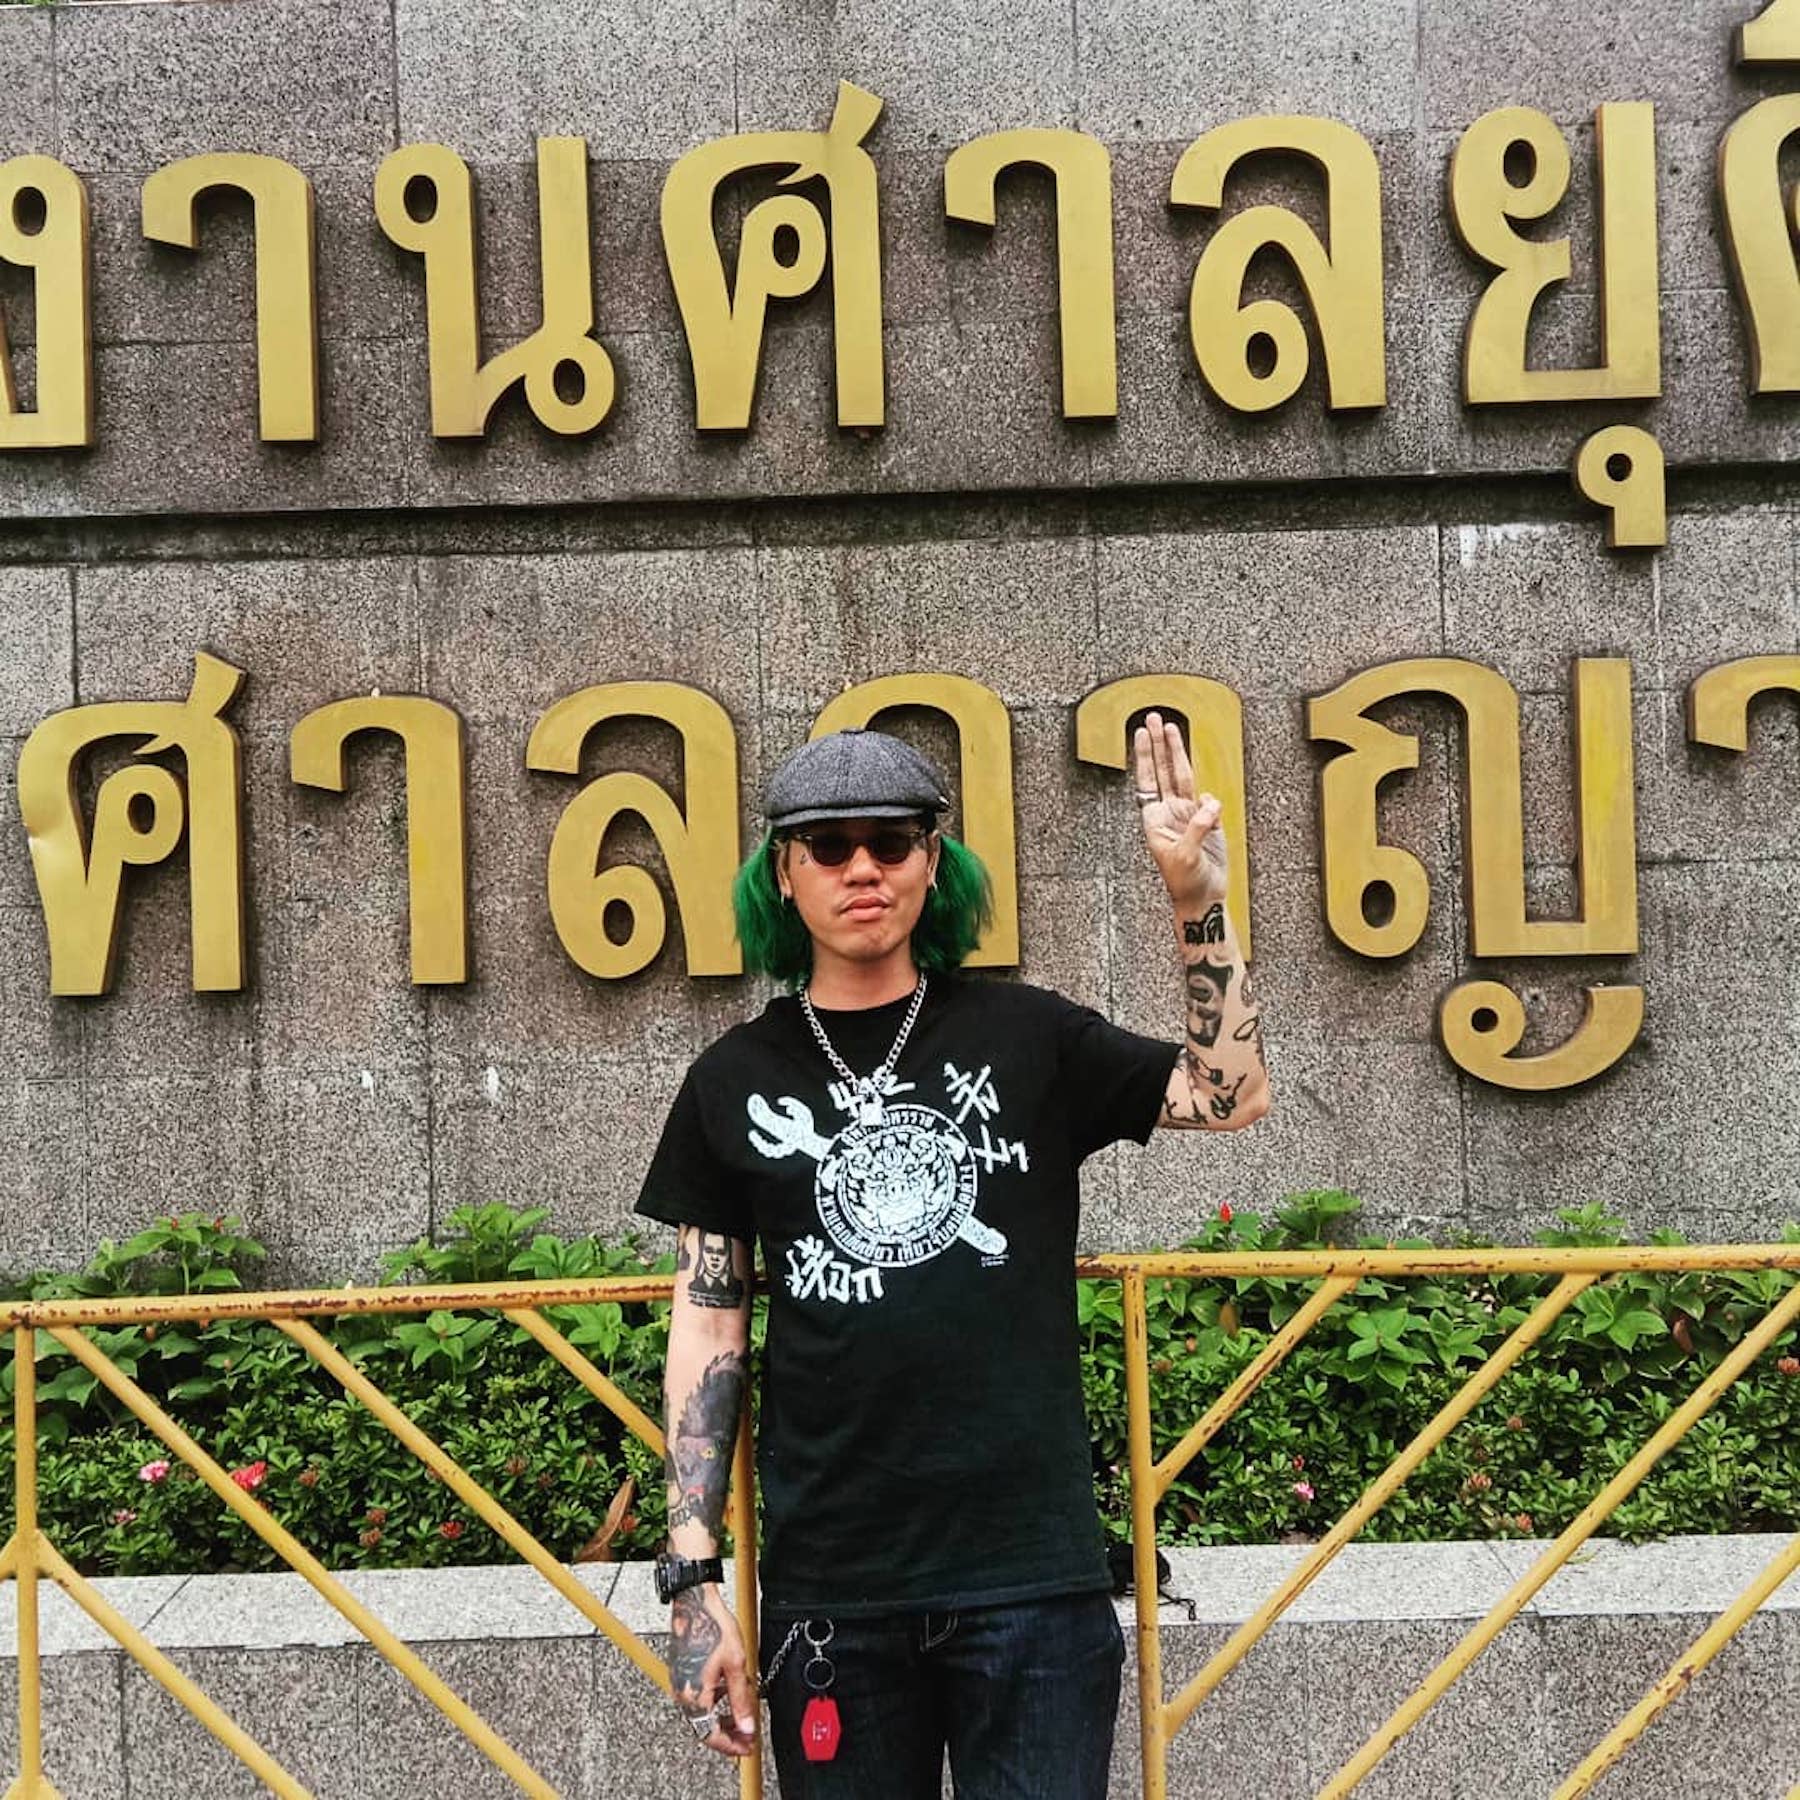 Thai activist handed down longest sentence of 50 years